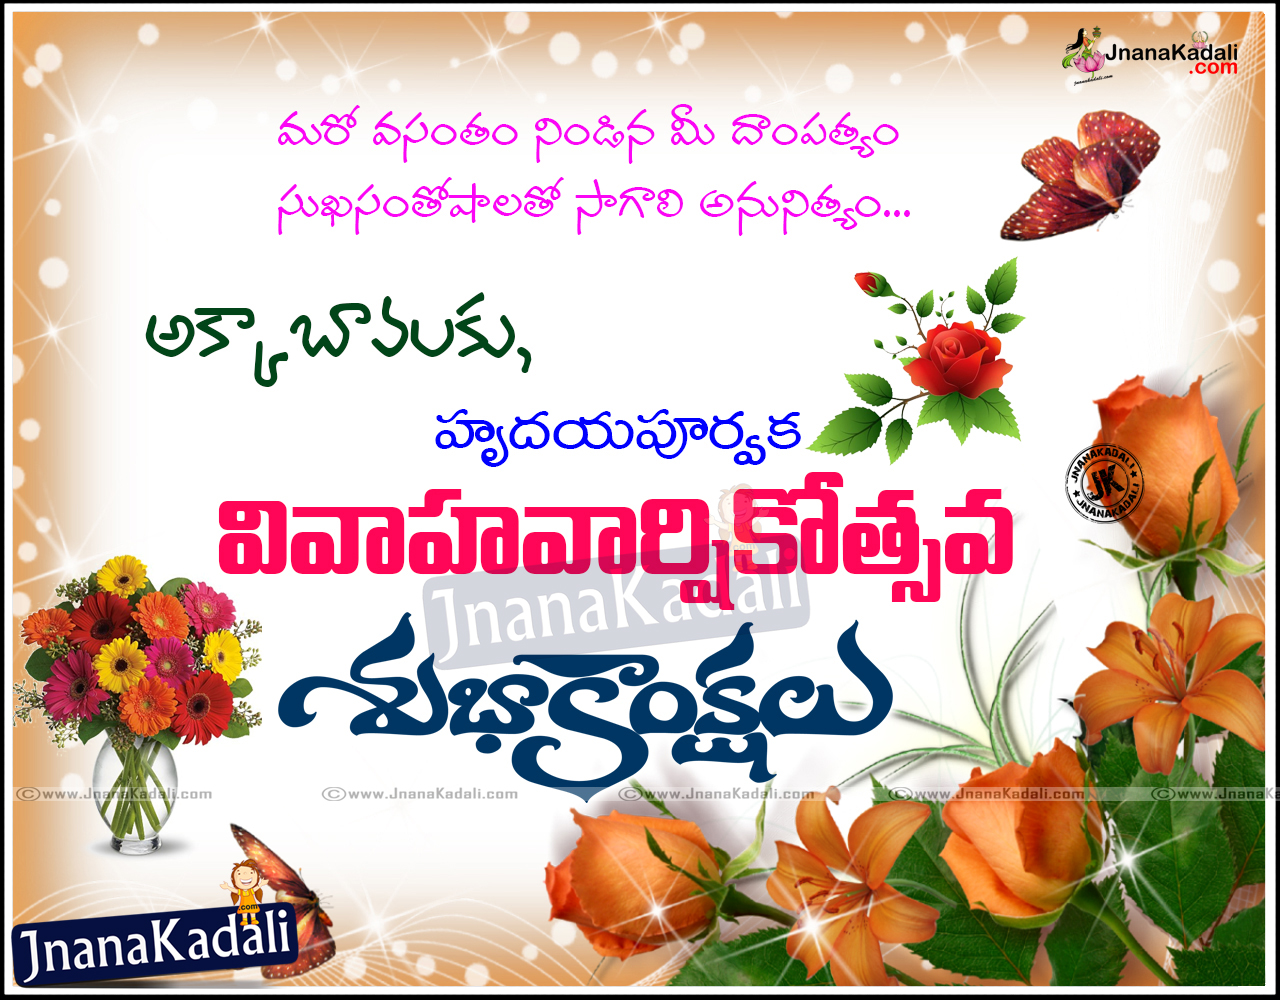 Marriage day hd Telugu kavithalu wallpapers for Sister | JNANA ...